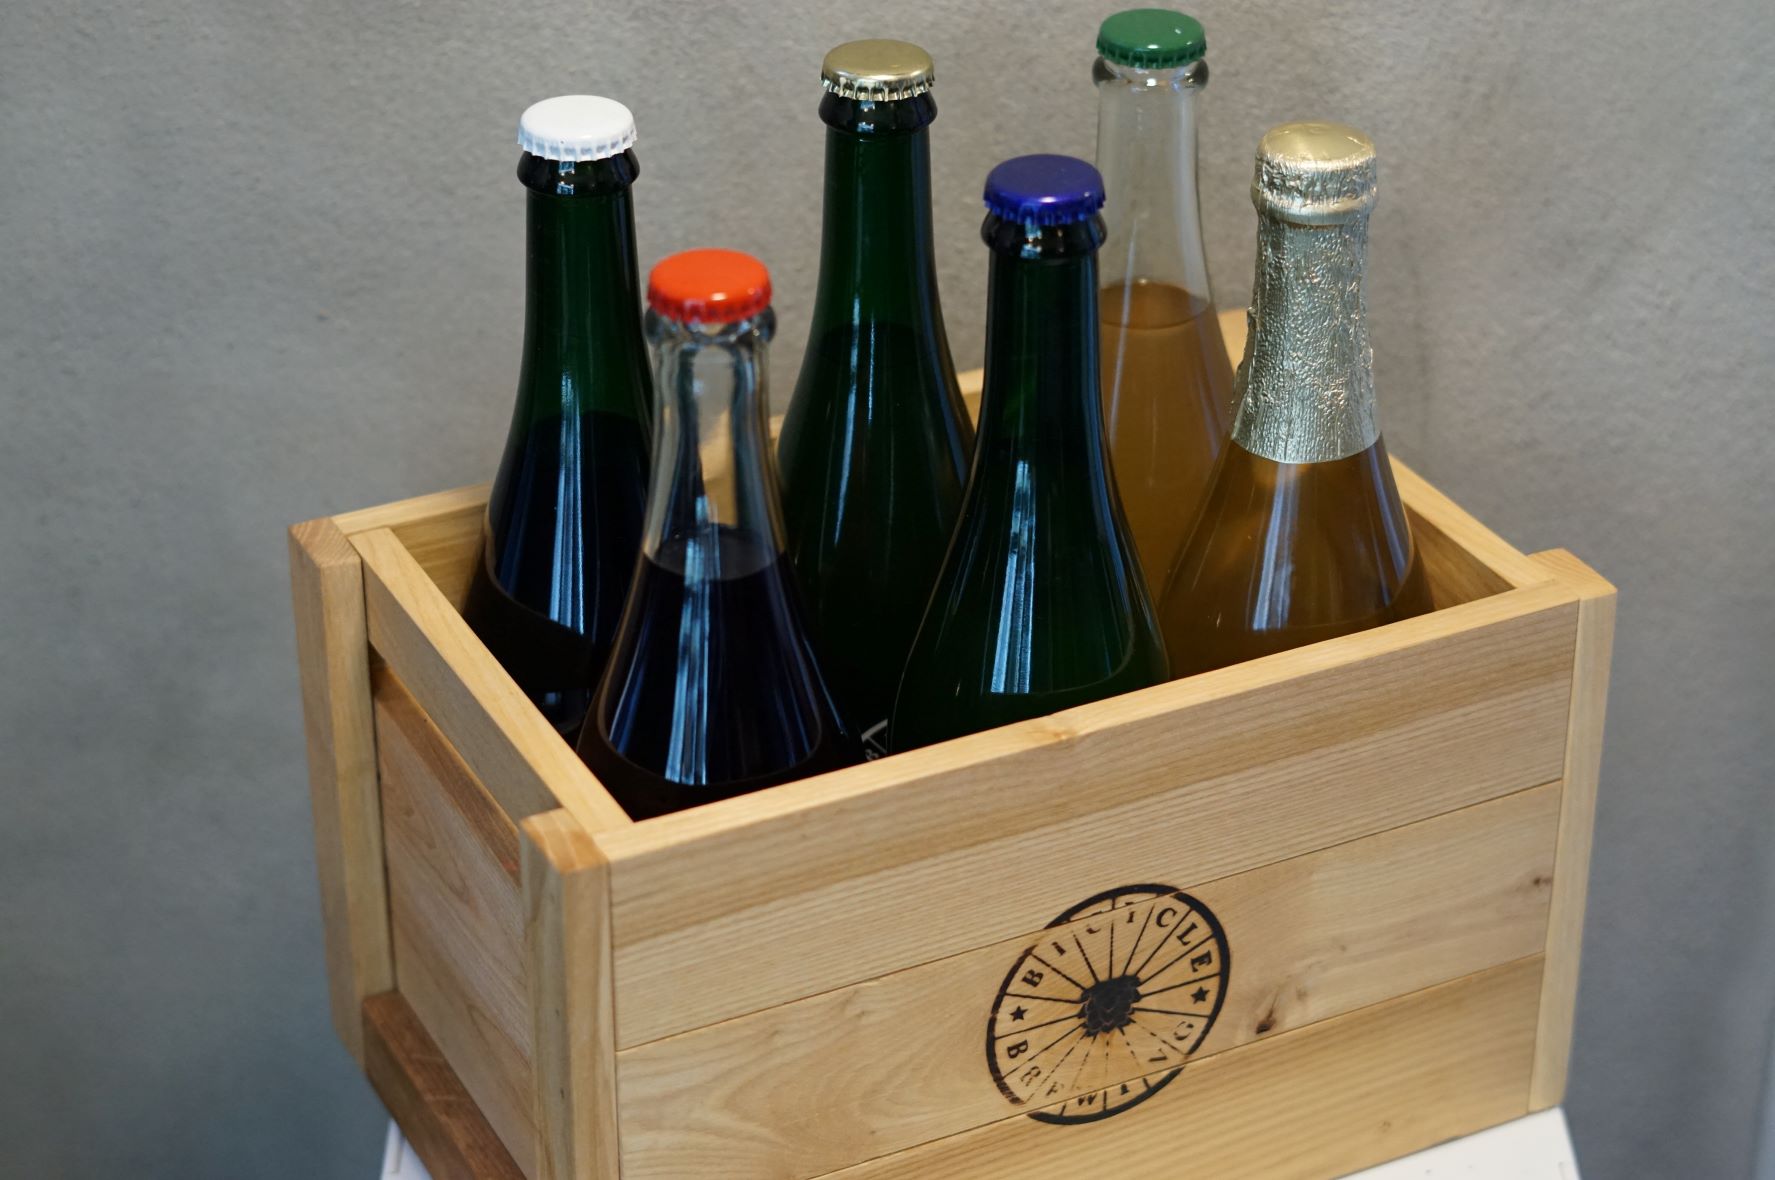 Beer crate - handmade from reclaimed wood